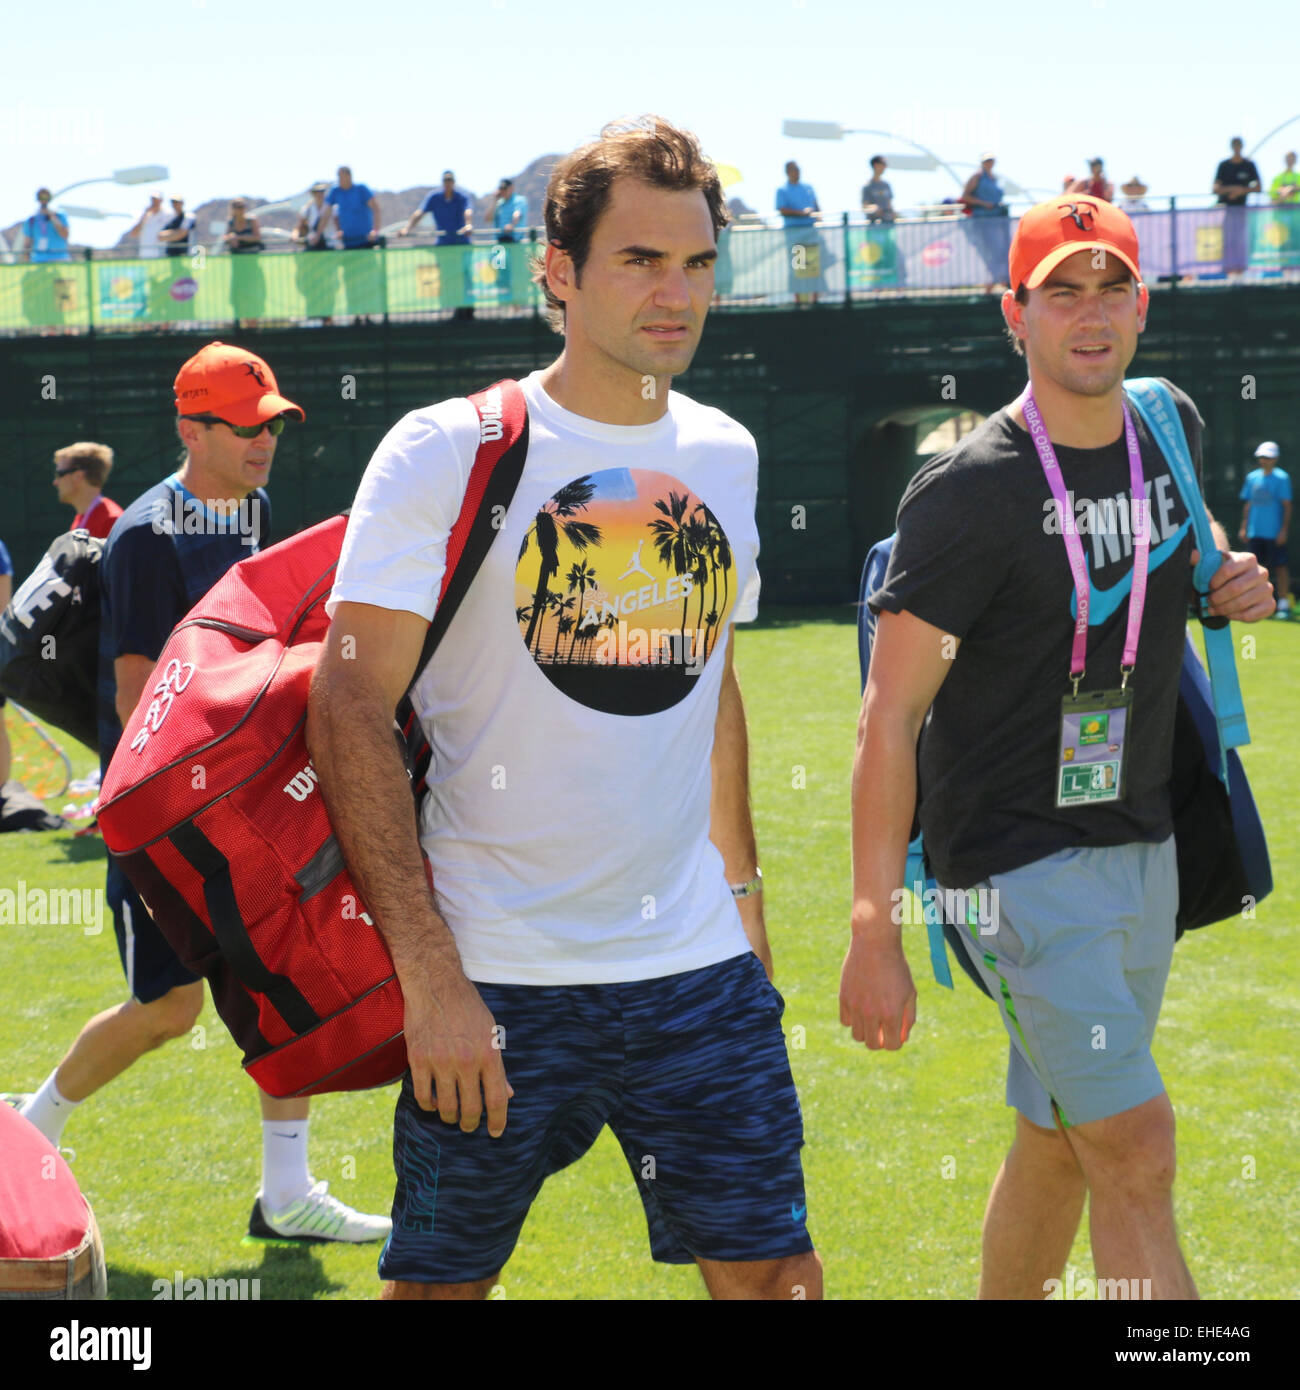 Indian Wells, California USA 12 mars 2015, joueur de tennis suisse Roger Federer au BNP Paribas Open. Credit : Lisa Werner/Alamy Live News Banque D'Images